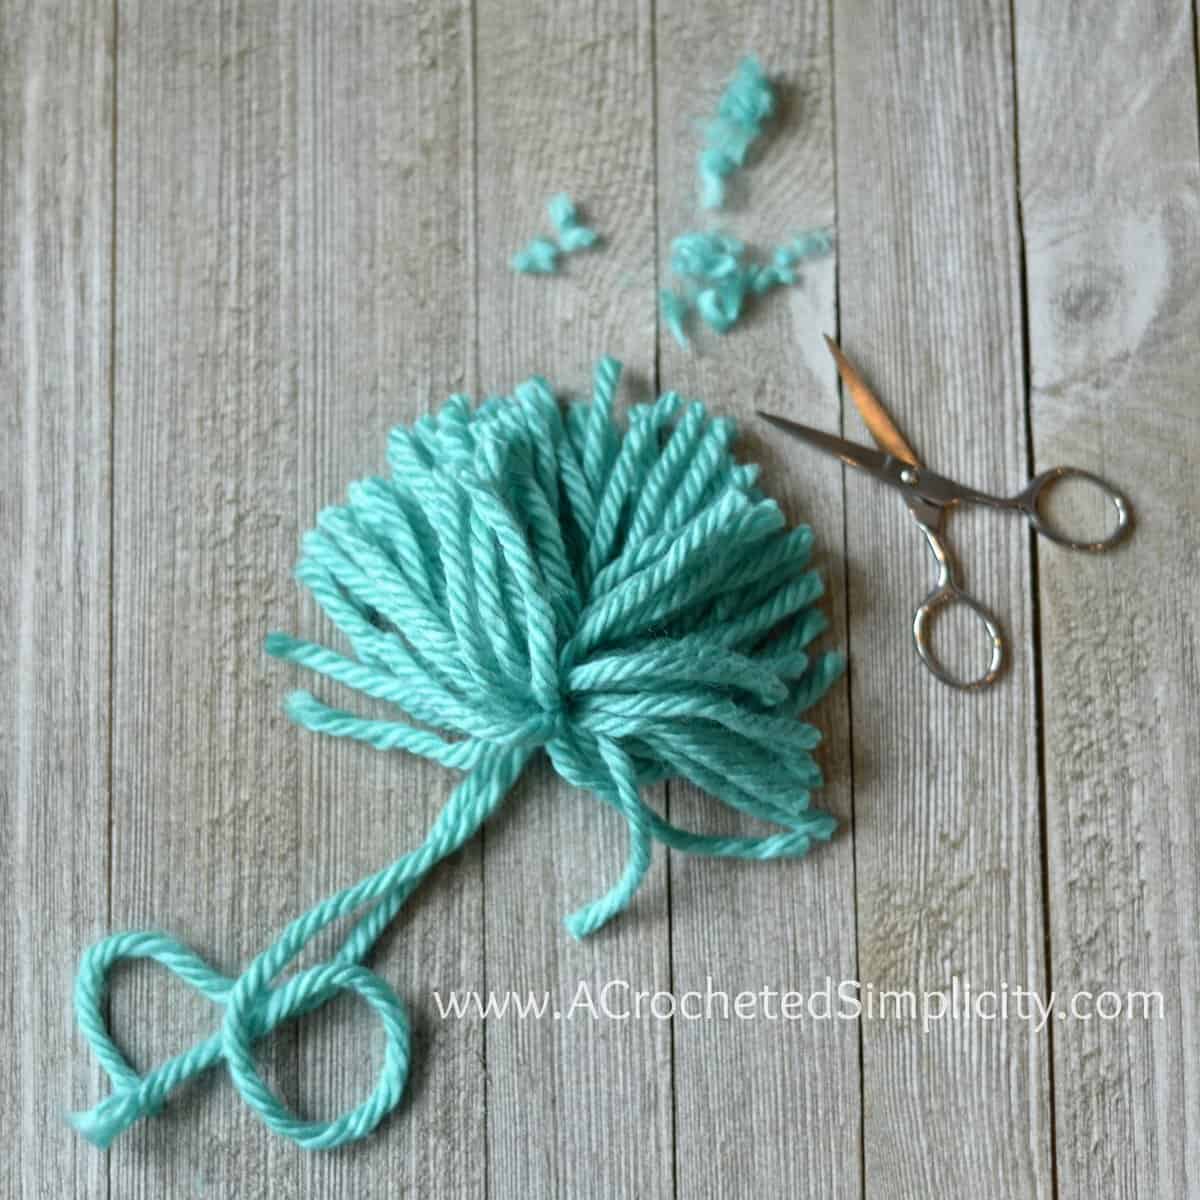 How to Make Pom Pom - A Crocheted Simplicity